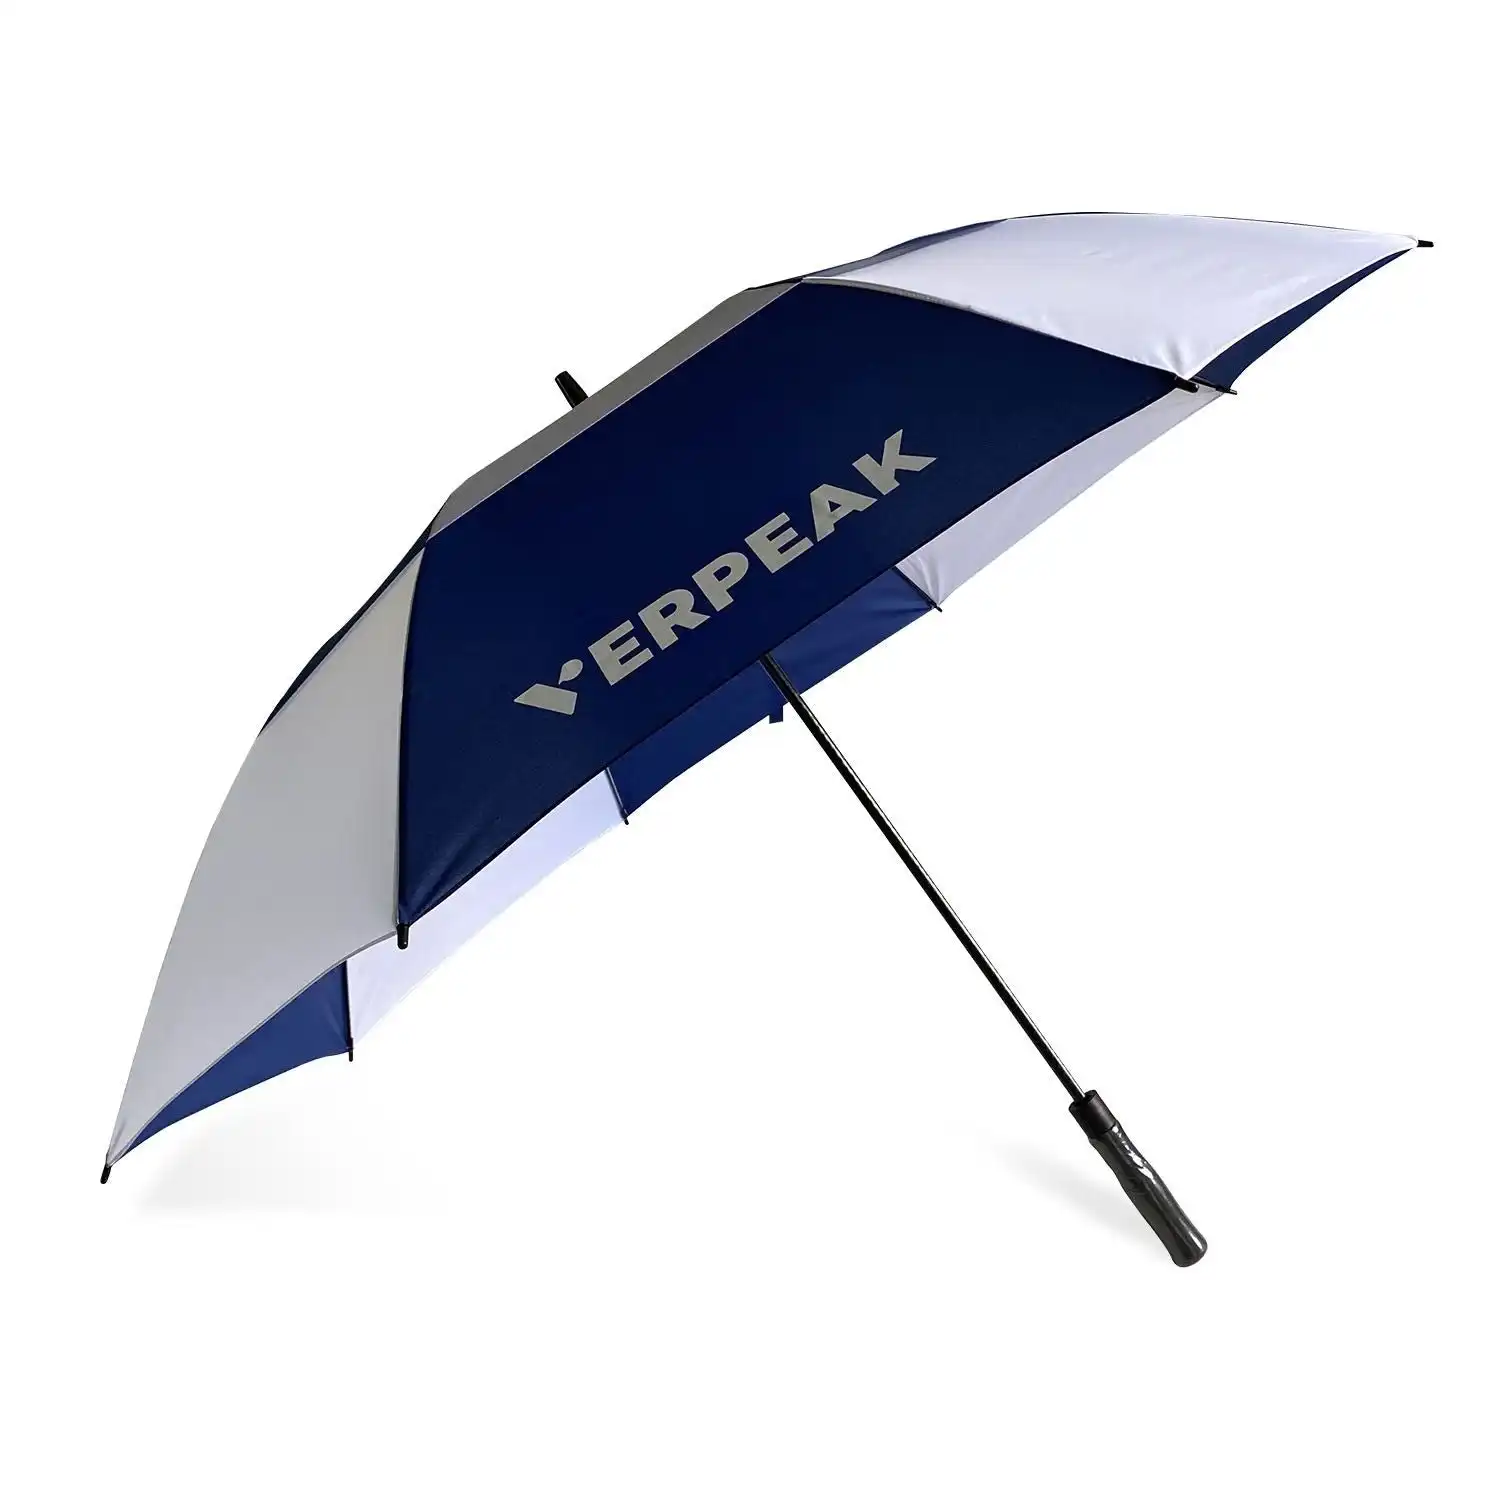 Verpeak 62" Oversize Auto Open Golf Umbrella Double Canopy Windproof Lightweight Blue and White